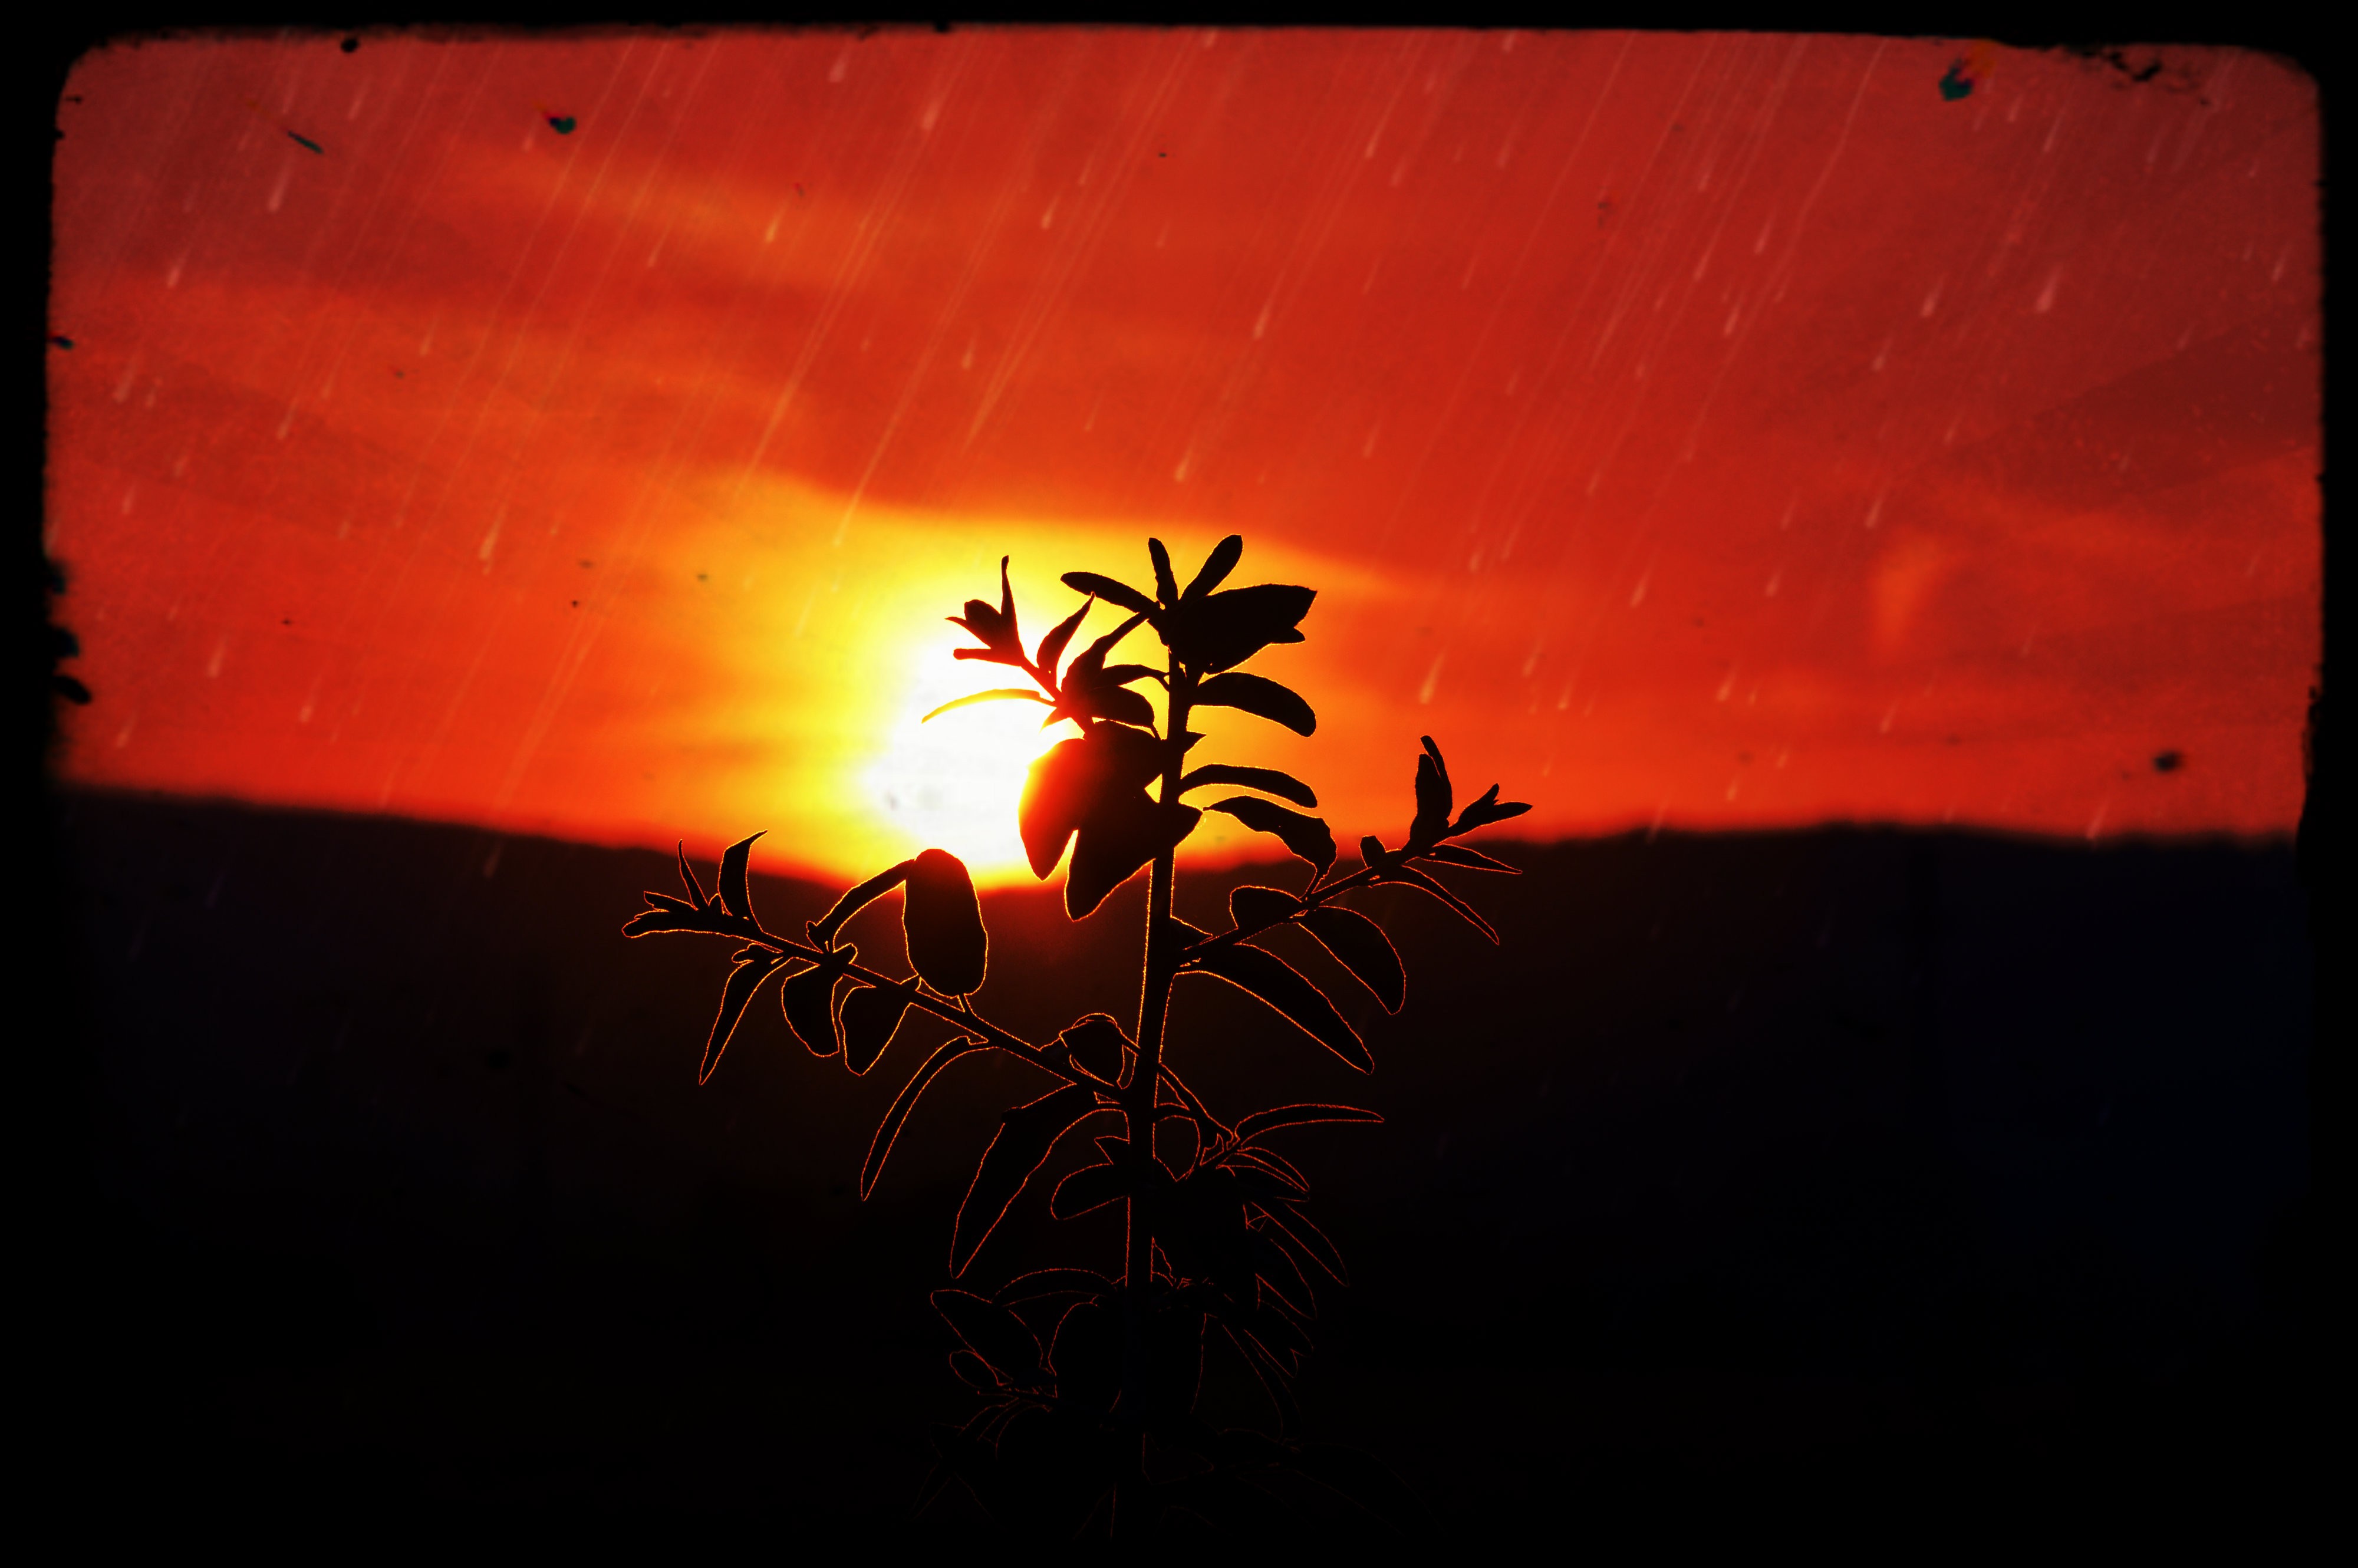 General 4000x2660 sunlight rain plants Sun sky low light silhouette